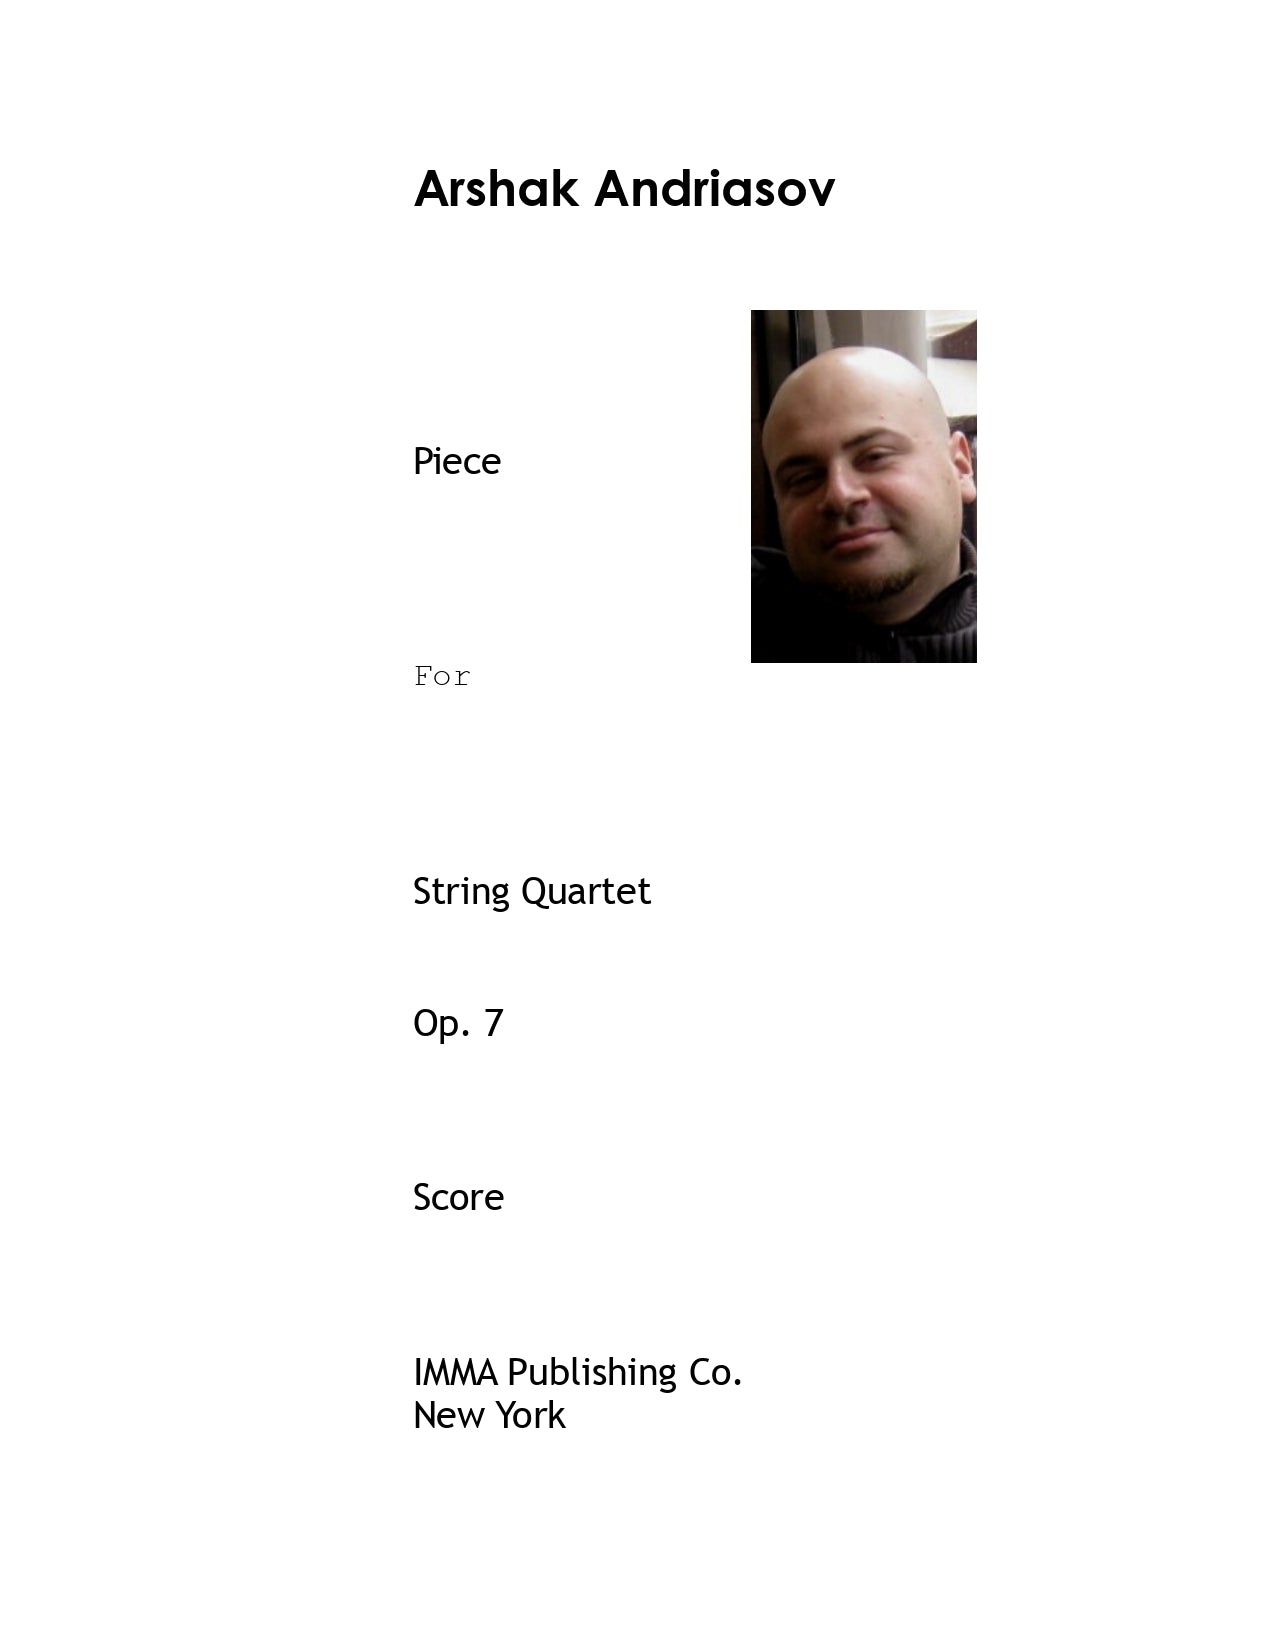 096. Arshak Andriasov: Piece, Op. 7 for String Quartet (PDF)